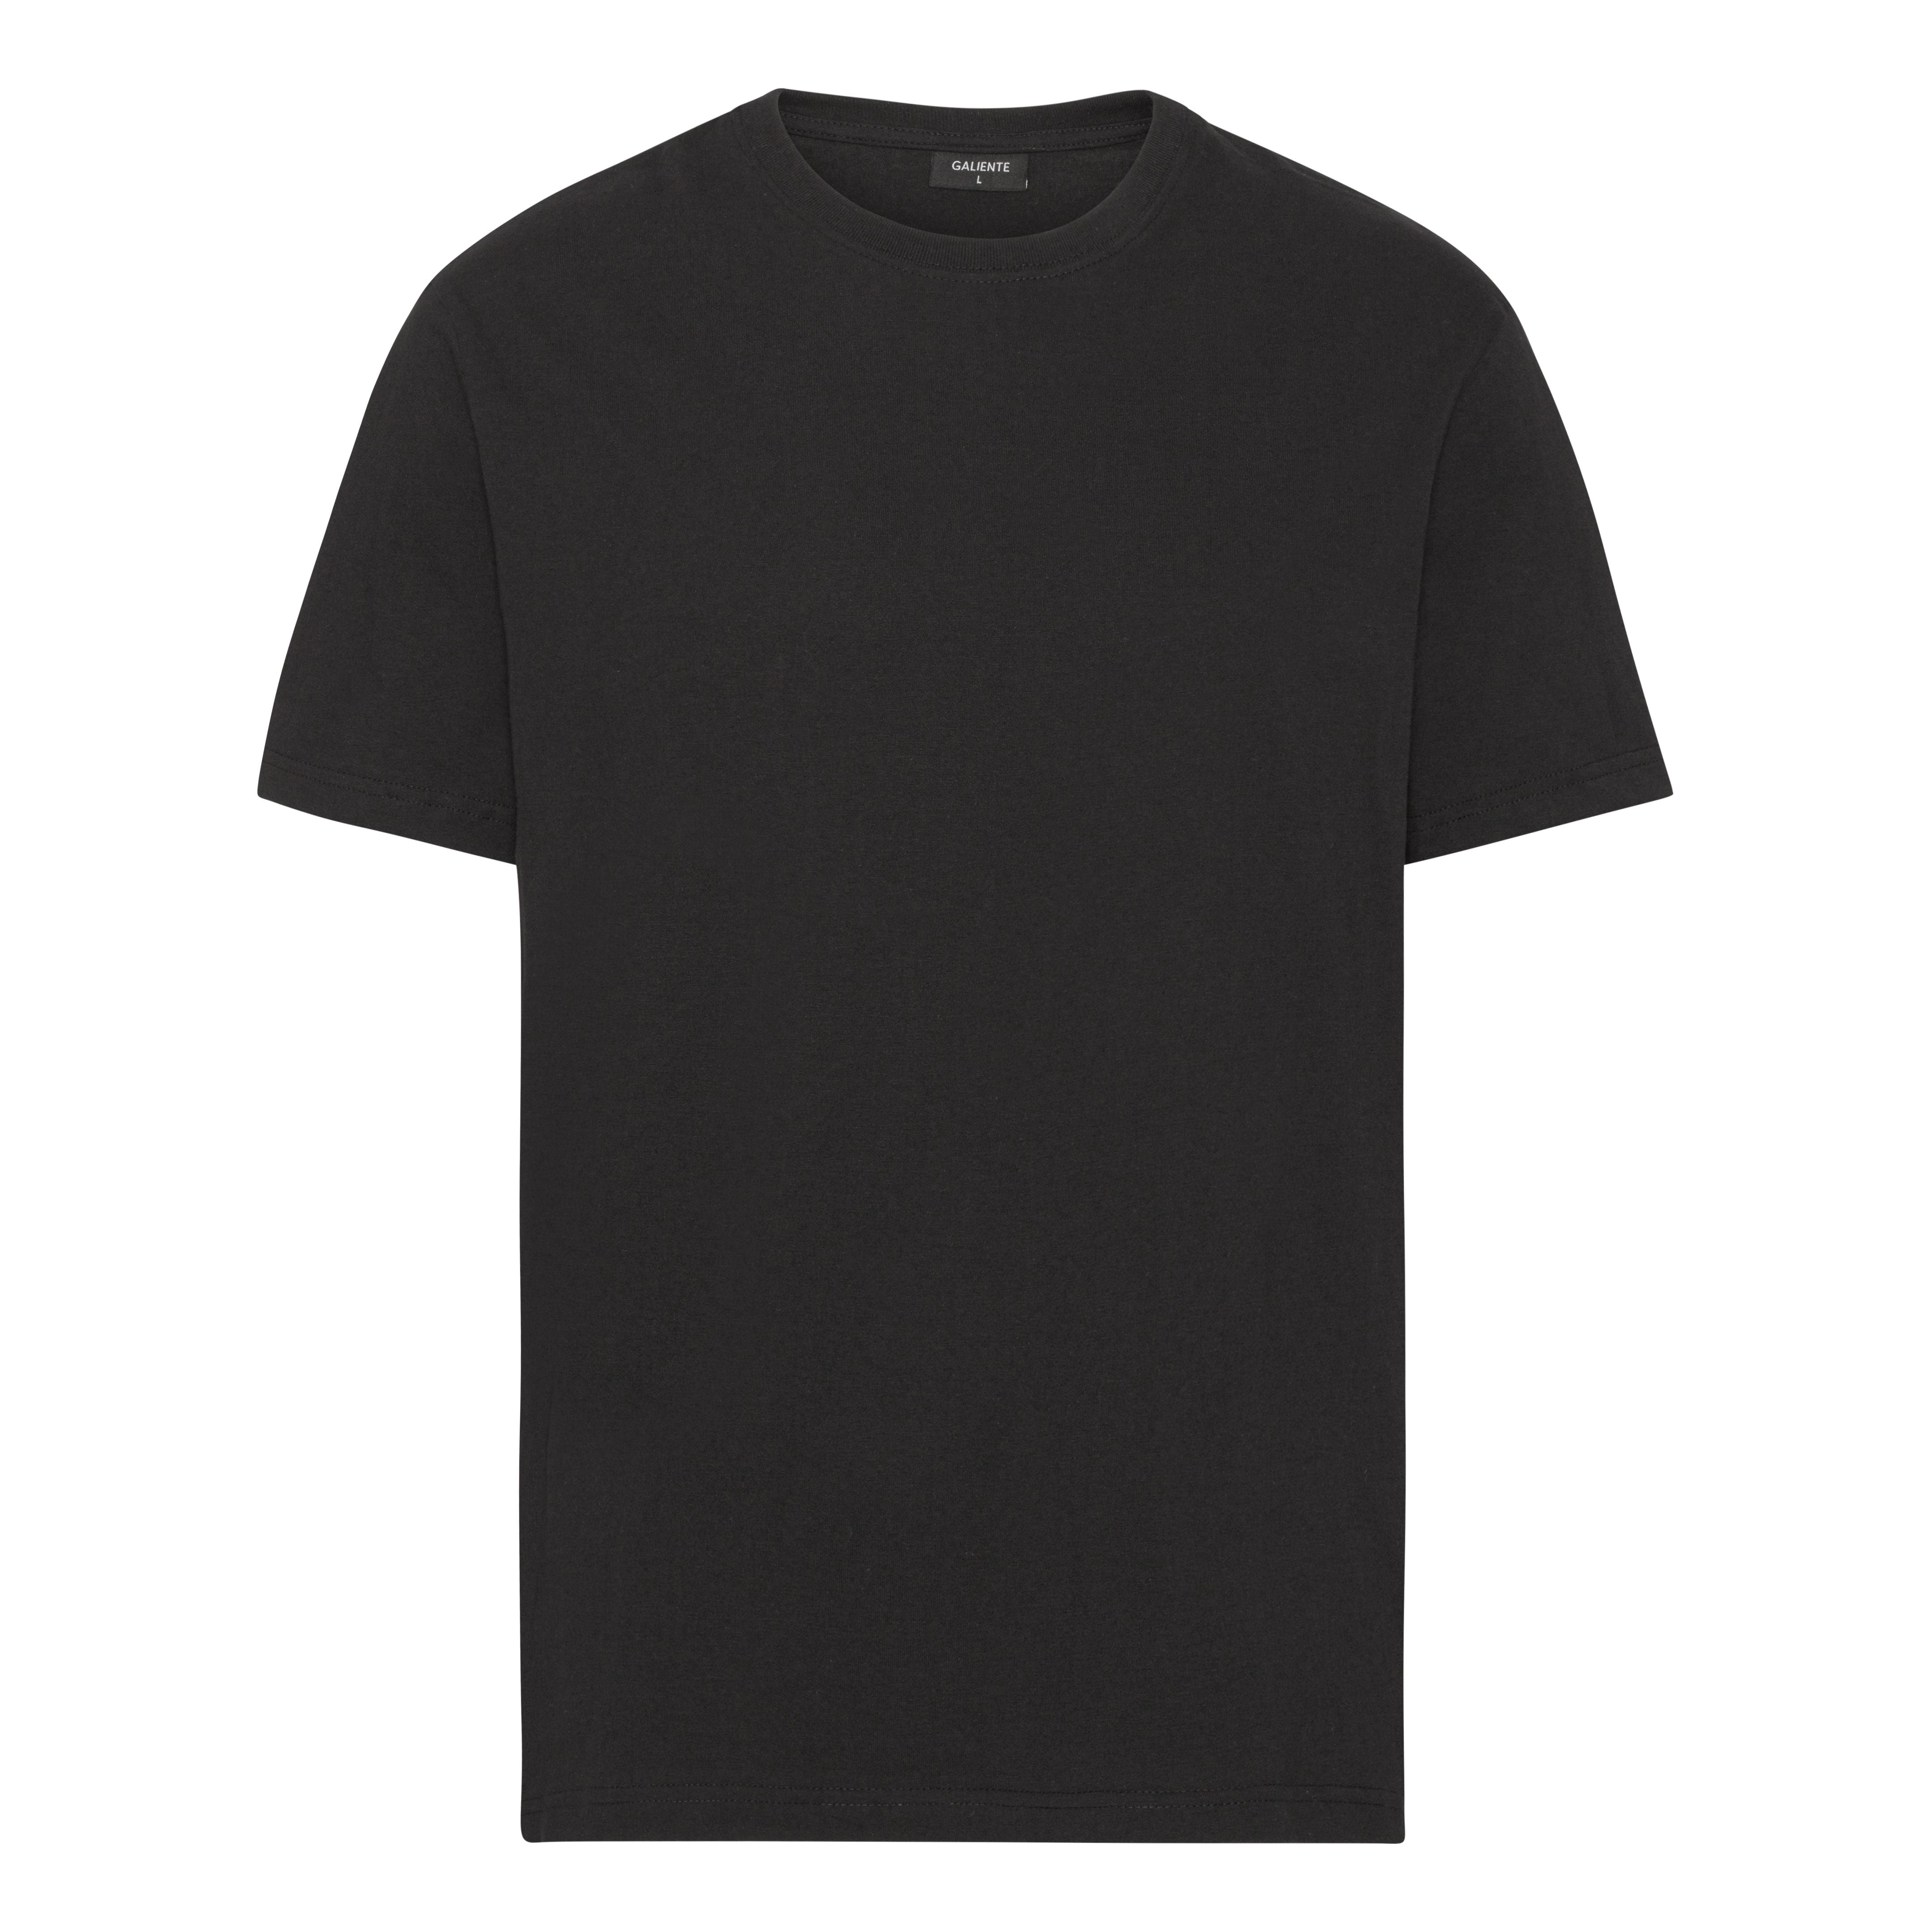 Oversize black T-shirt with glitter logo print